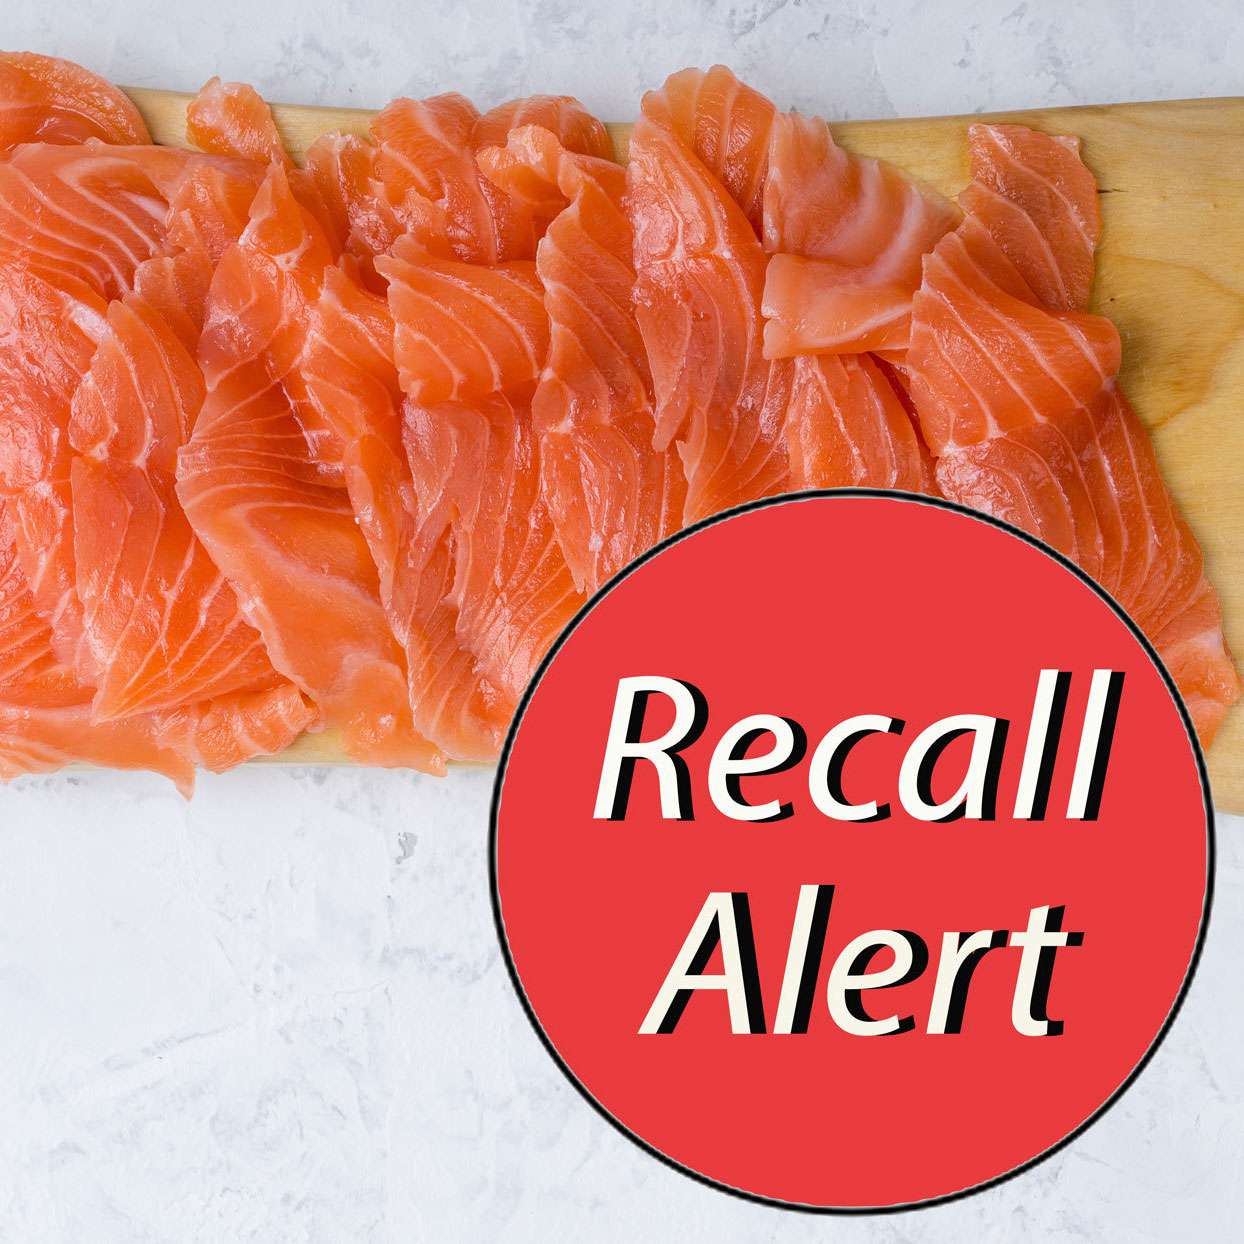 Smoked Salmon with a Recall Alert sticker